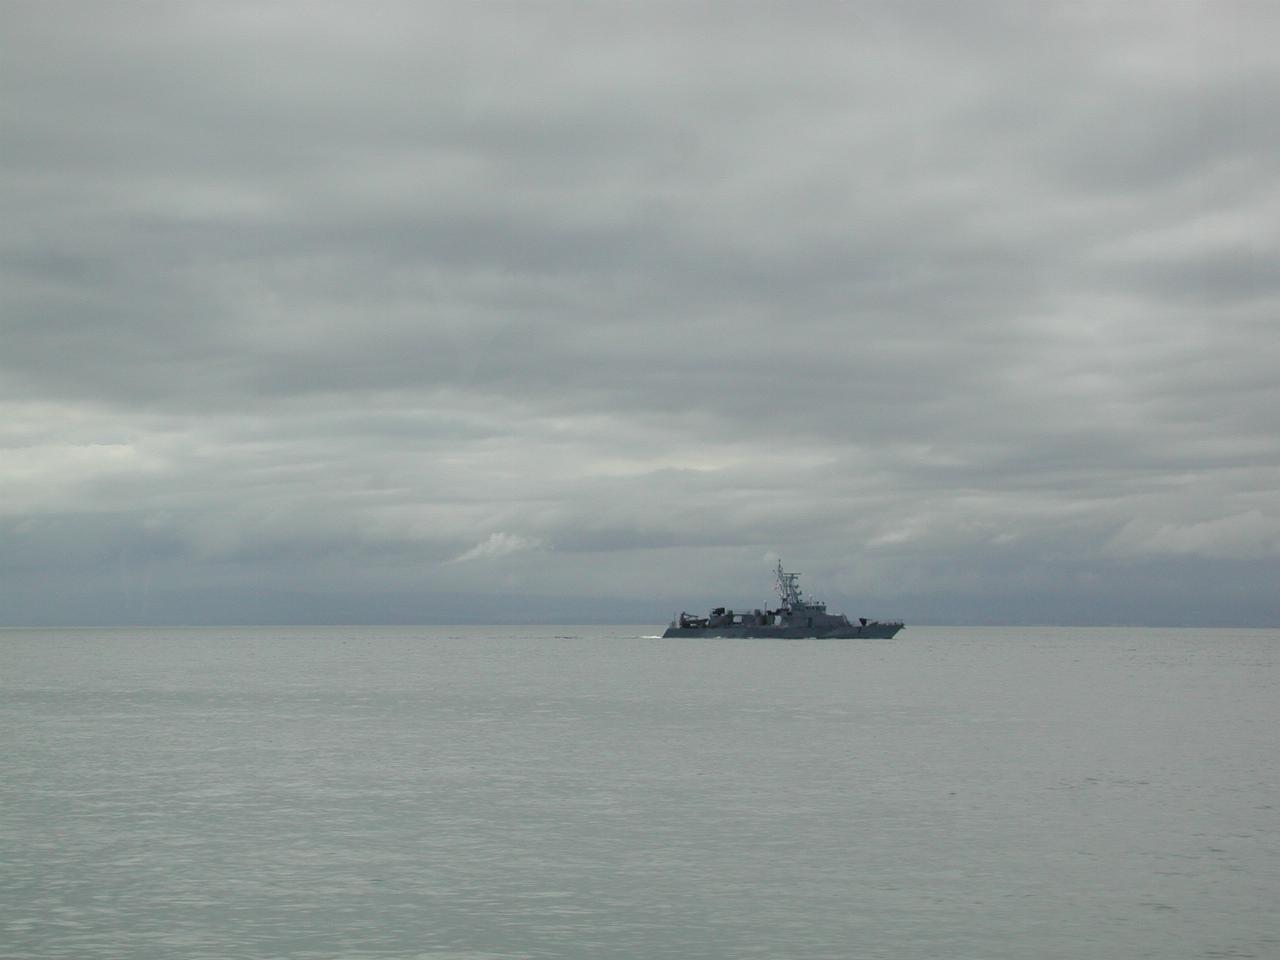 Naval vessel on patrol in the Strait of Juan de Fuca